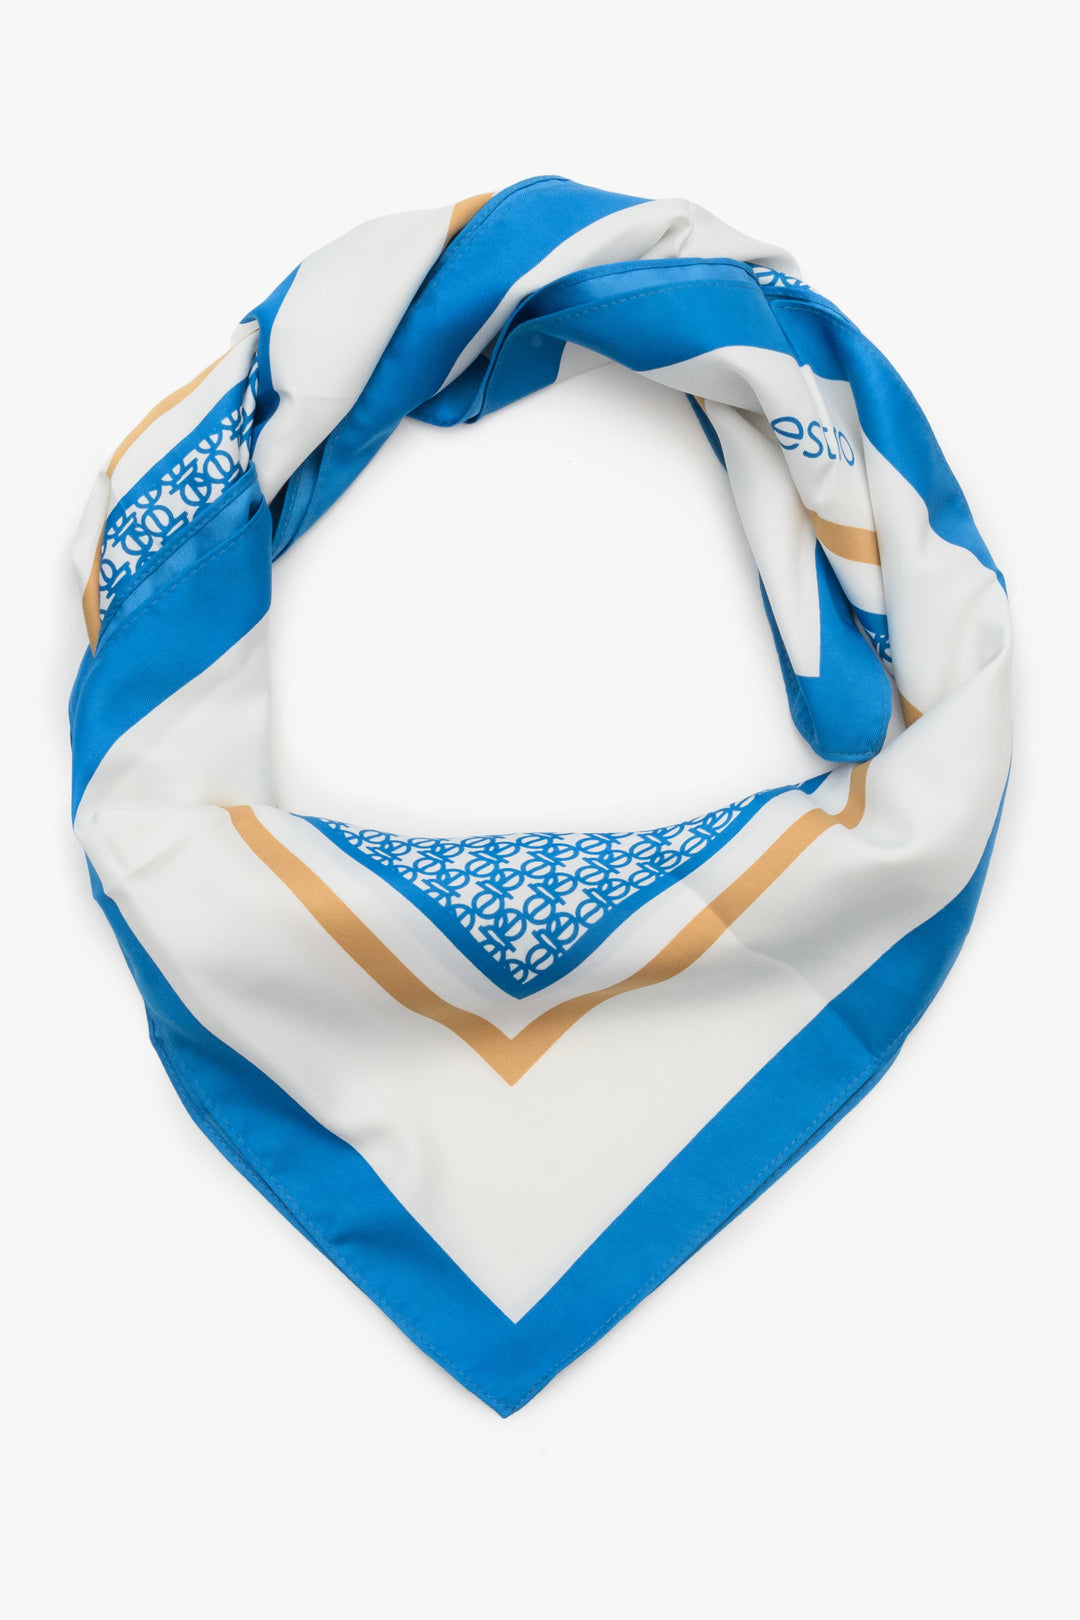 Women's blue & white neckerchief with geometric pattern by Estro.